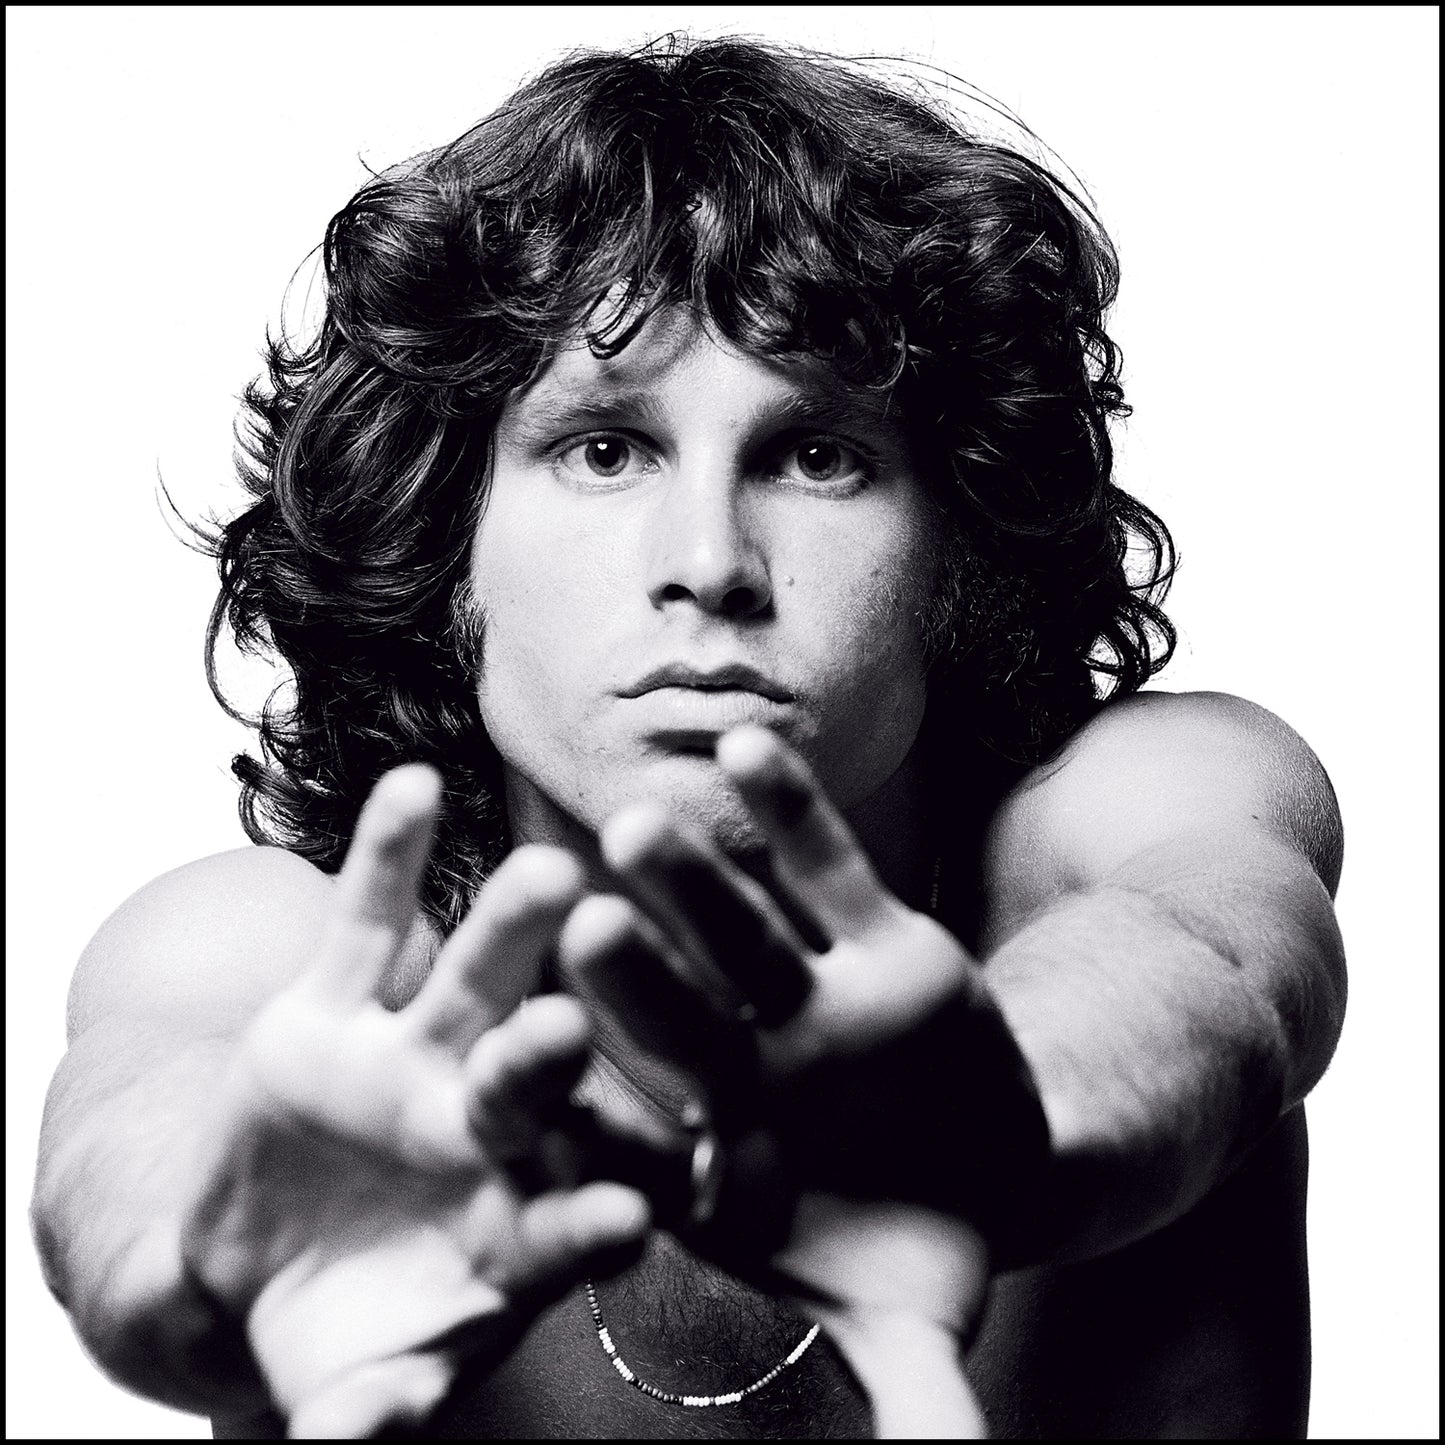 Jim Morrison, The Doors, "The Push", New York City, 1967 by Joel Brodsky